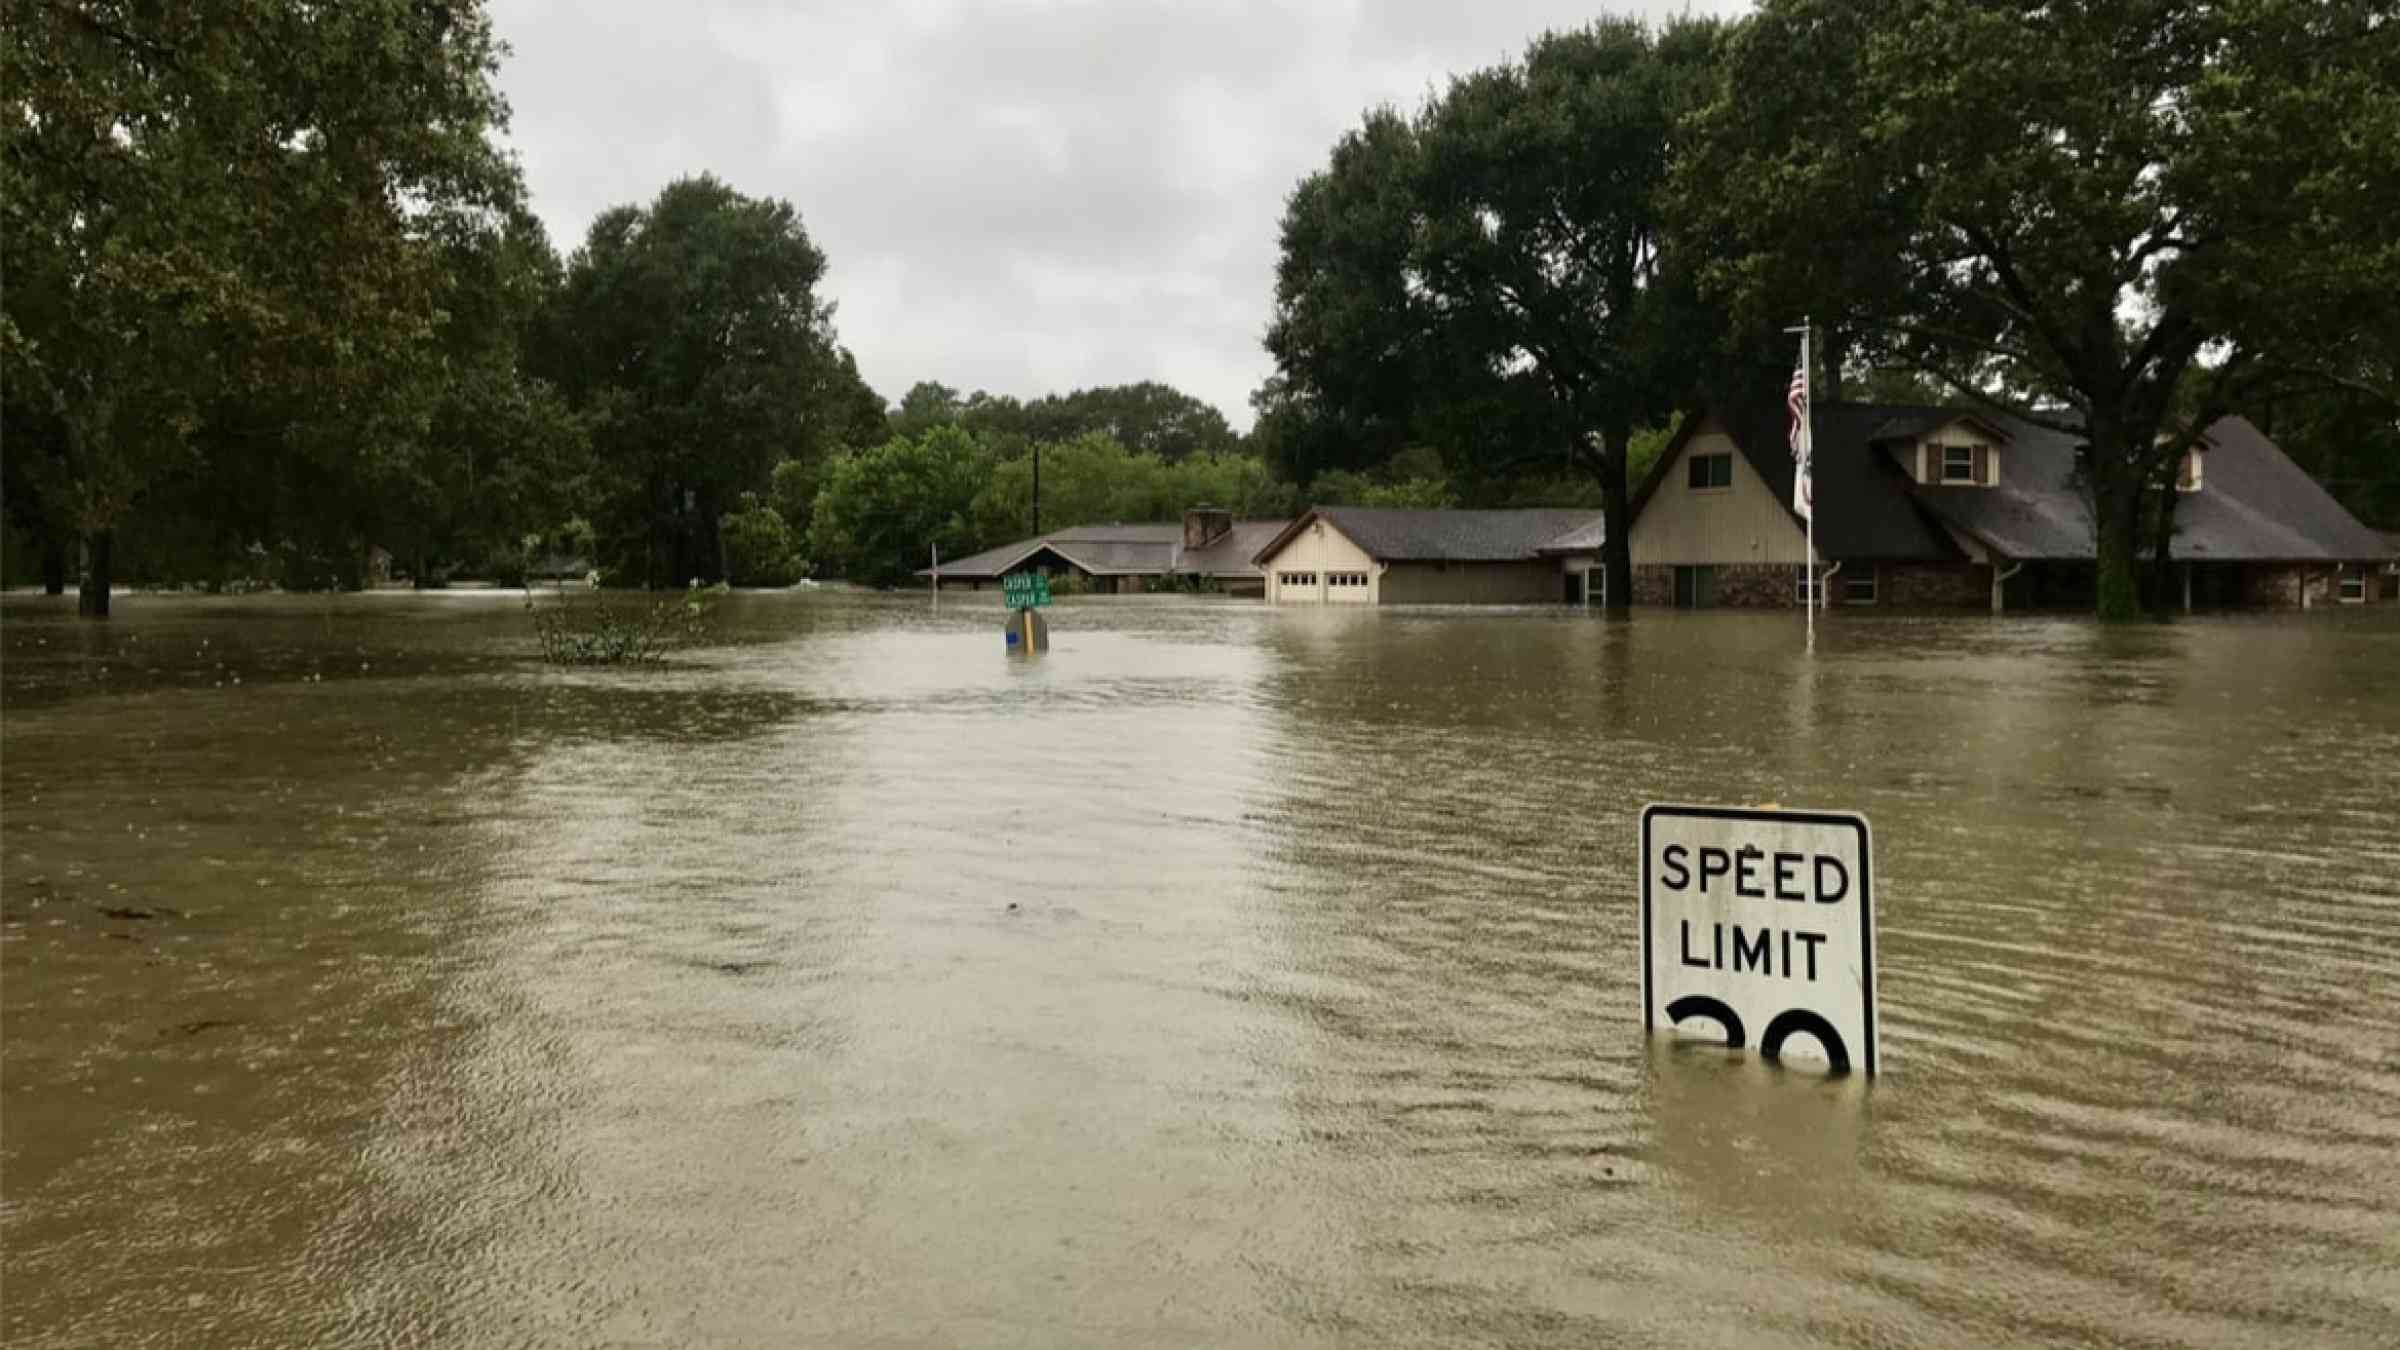 Flooded street following Hurricane Harvey in Texas, USA (2017).